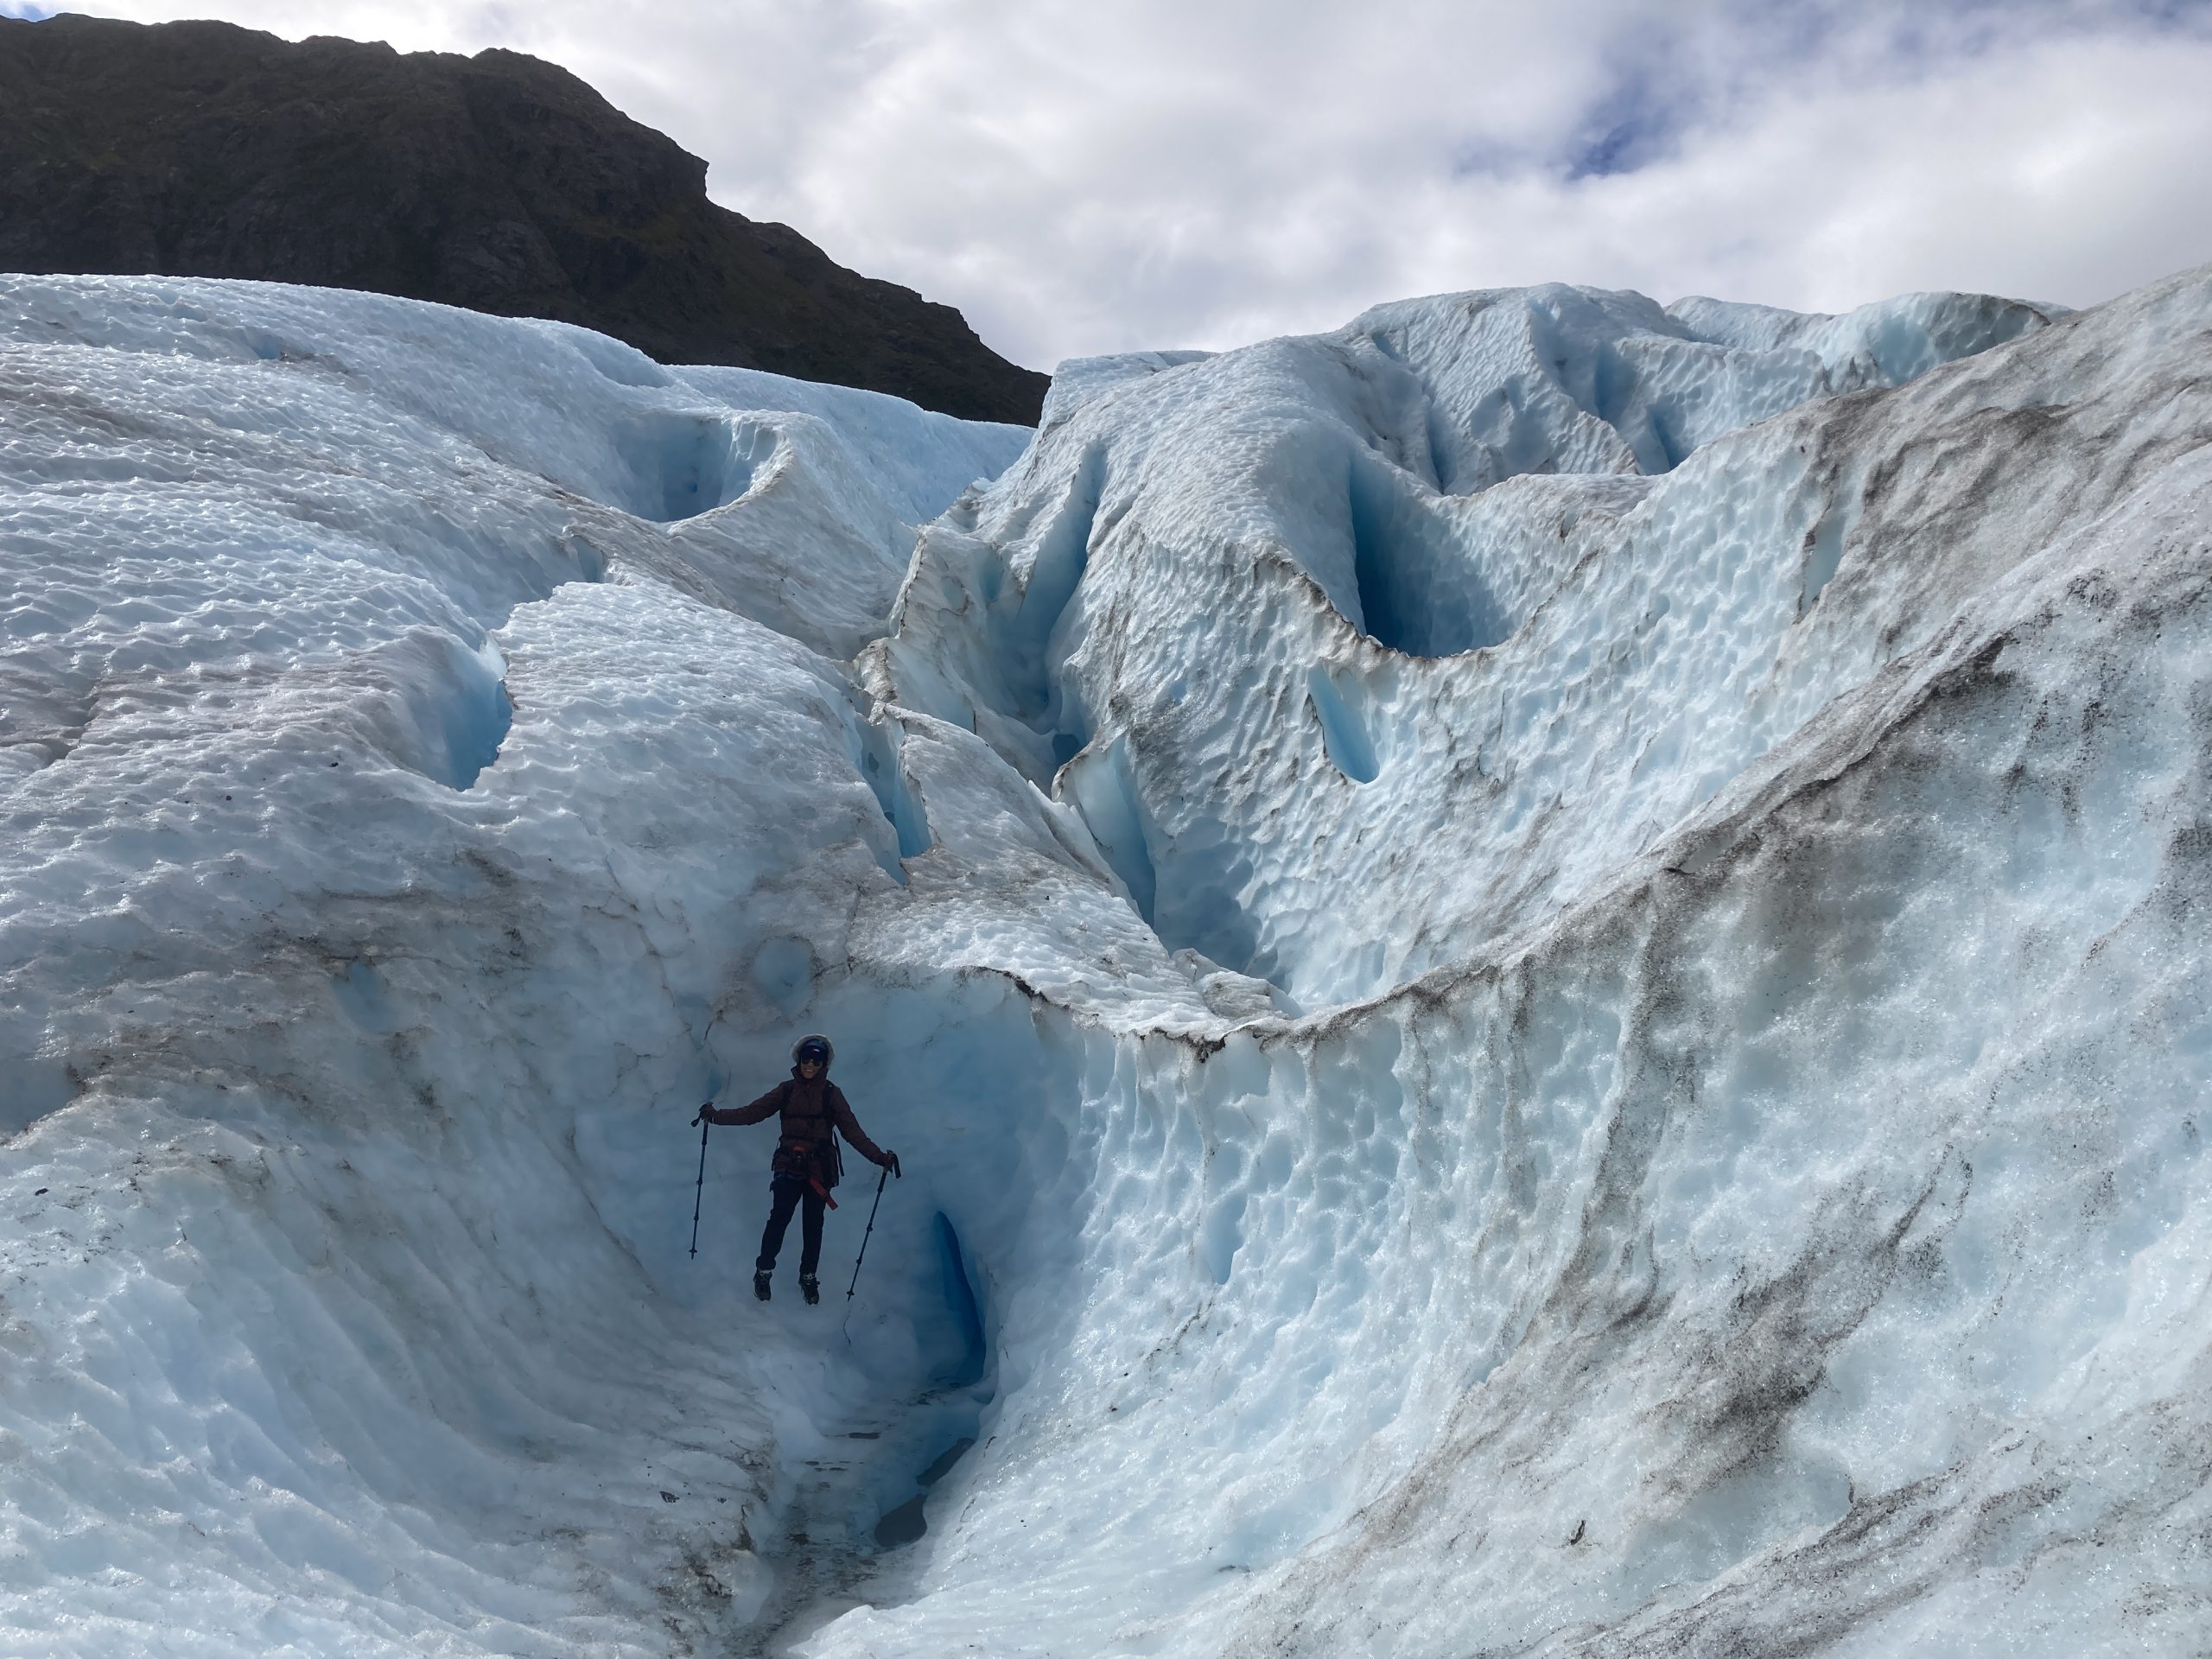 TRIP REPORT: 9/2/22 Exit Glacier Ice Hiking Adventure